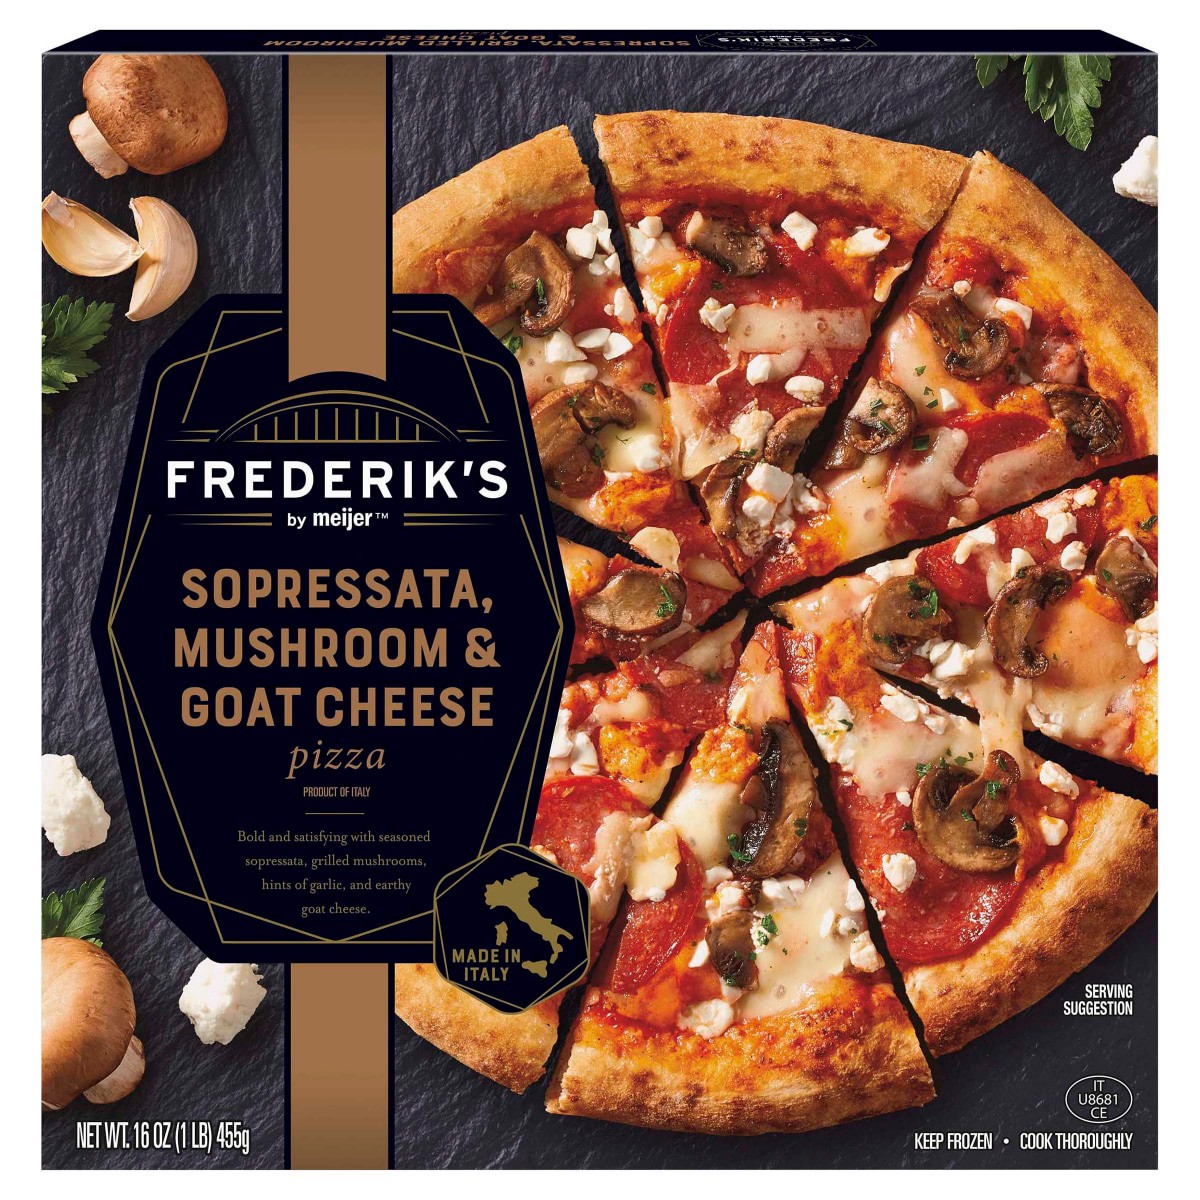 slide 1 of 29, FREDERIKS BY MEIJER Frederik's by Meijer Sopressata, Mushroom & Goat Cheese Pizza, 16 oz